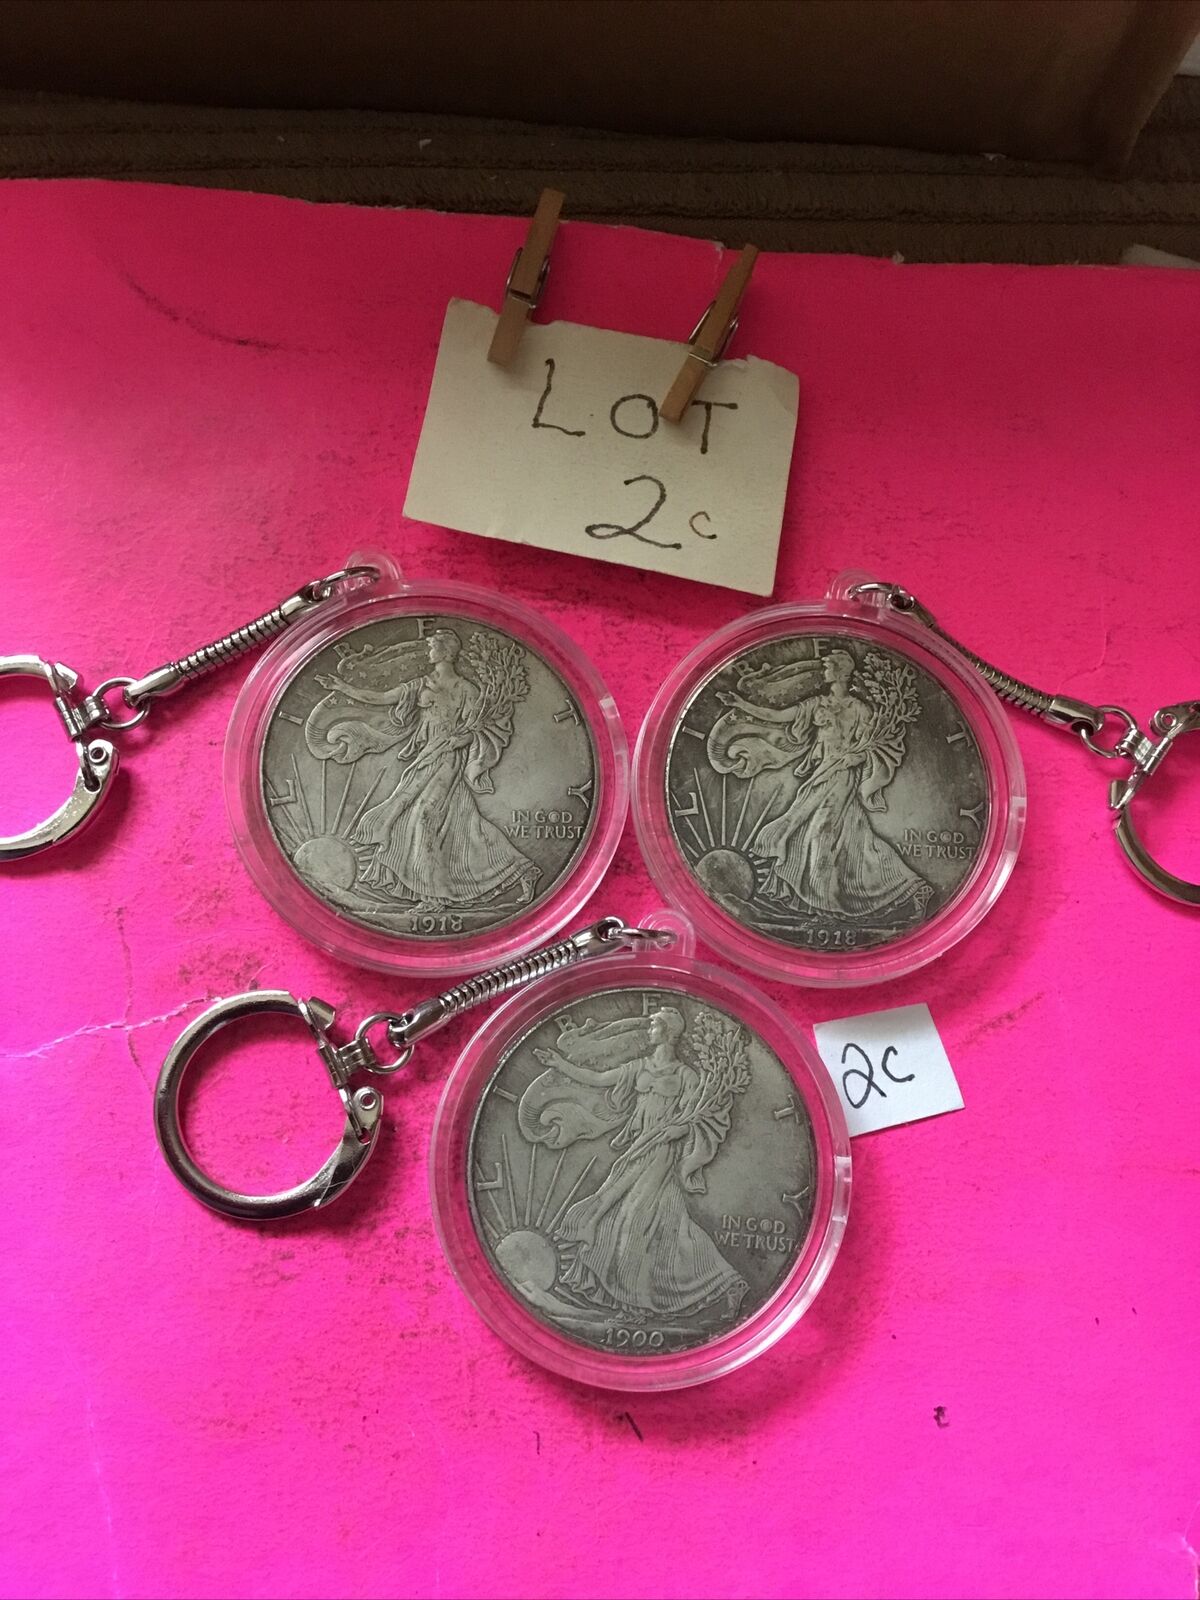 Set 3 Lot Coin Keychains 1918-1900-1918 Copies Junk Drawer Estate Find Read